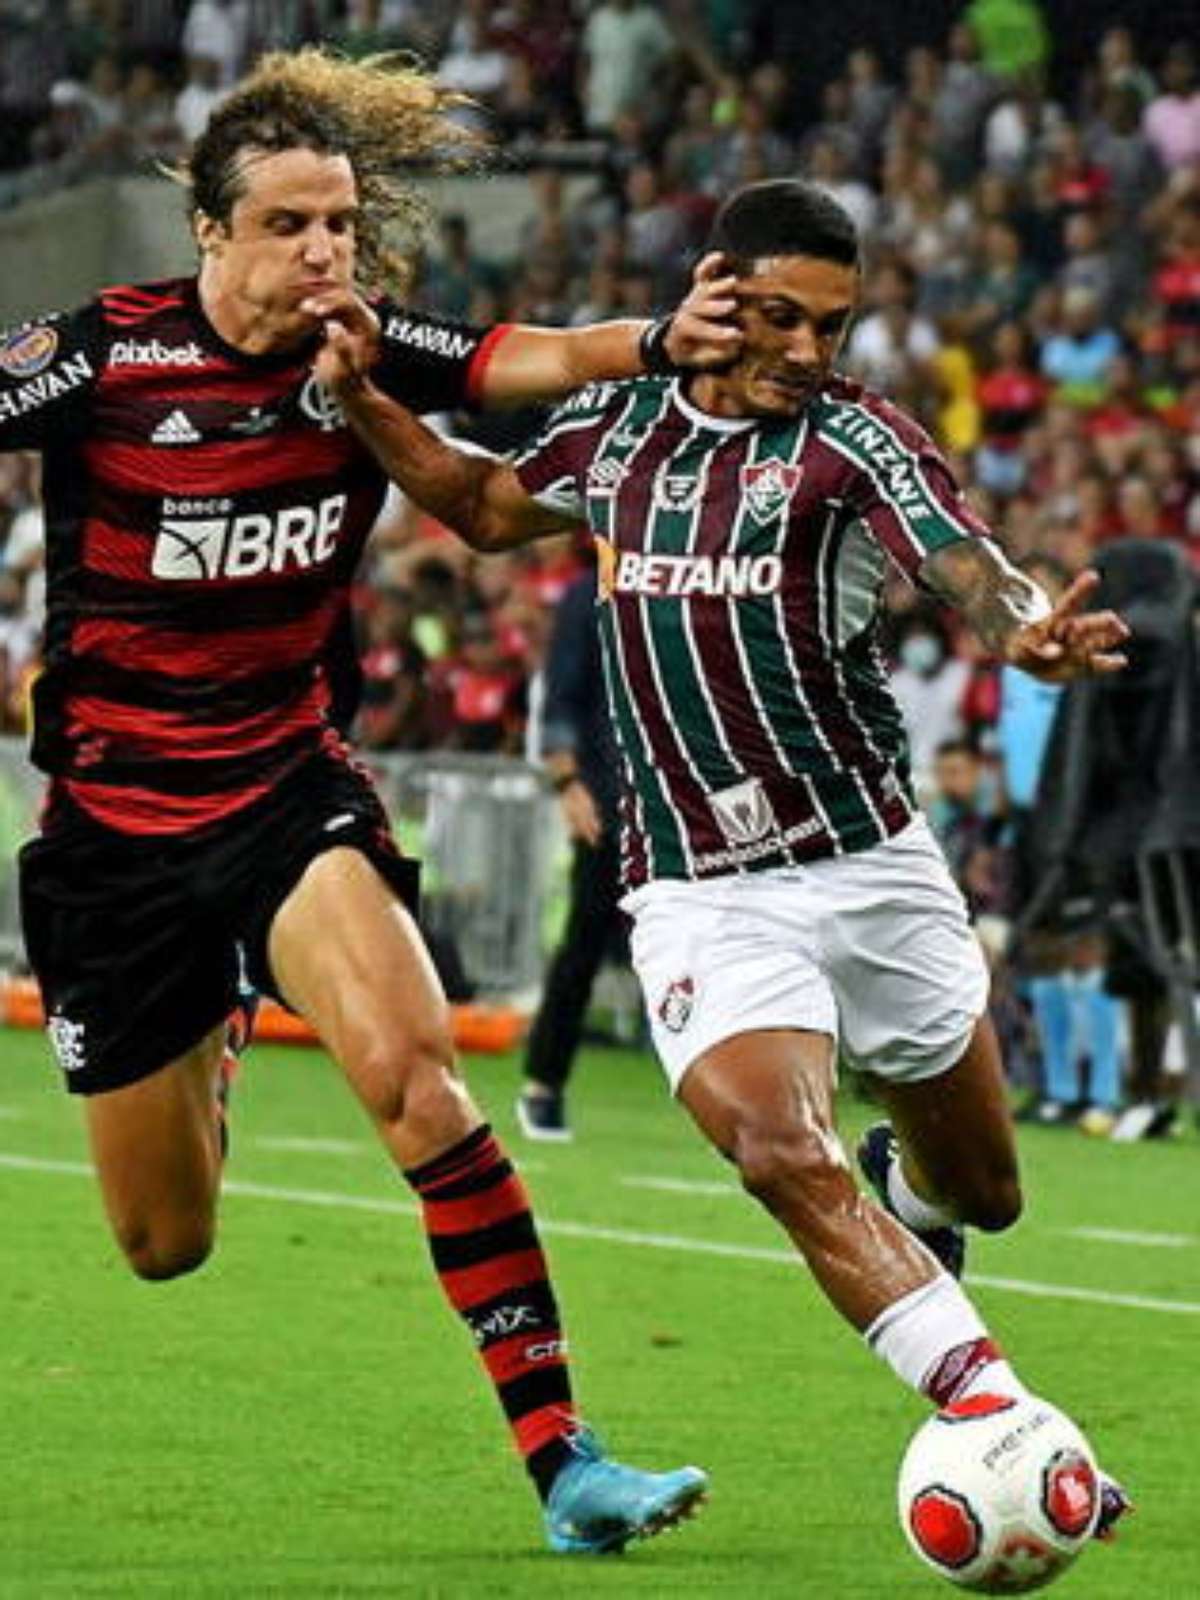 Campeonato Carioca  Flamengo x Fluminense - PRÉ E PÓS-JOGO